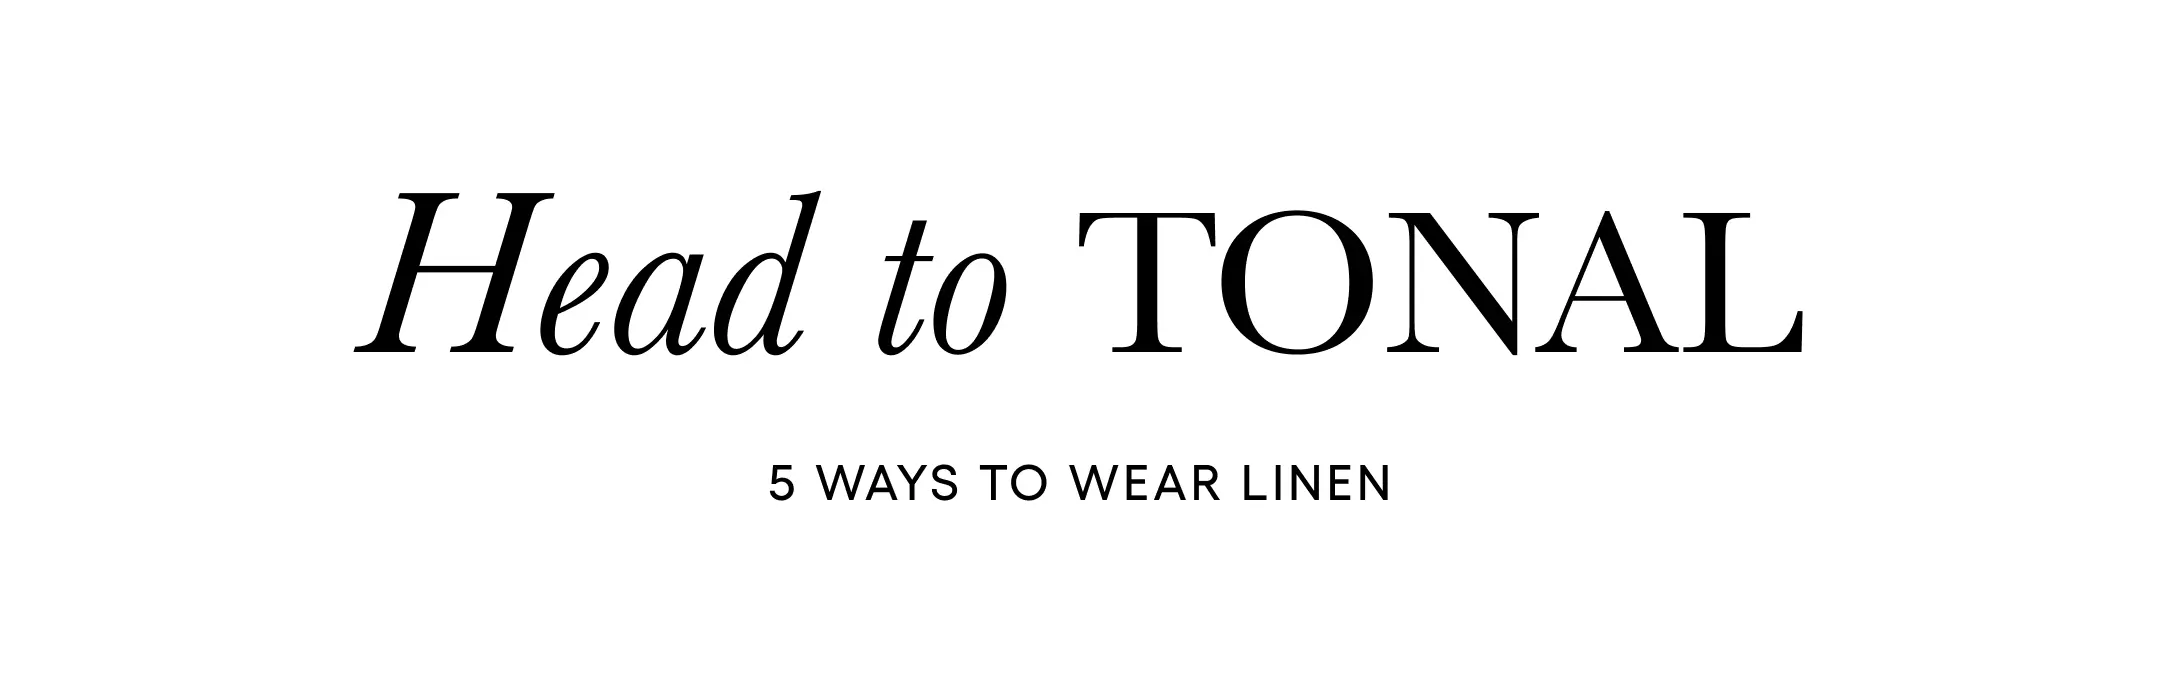 Head to Tonal: 5 Ways to Wear Linen